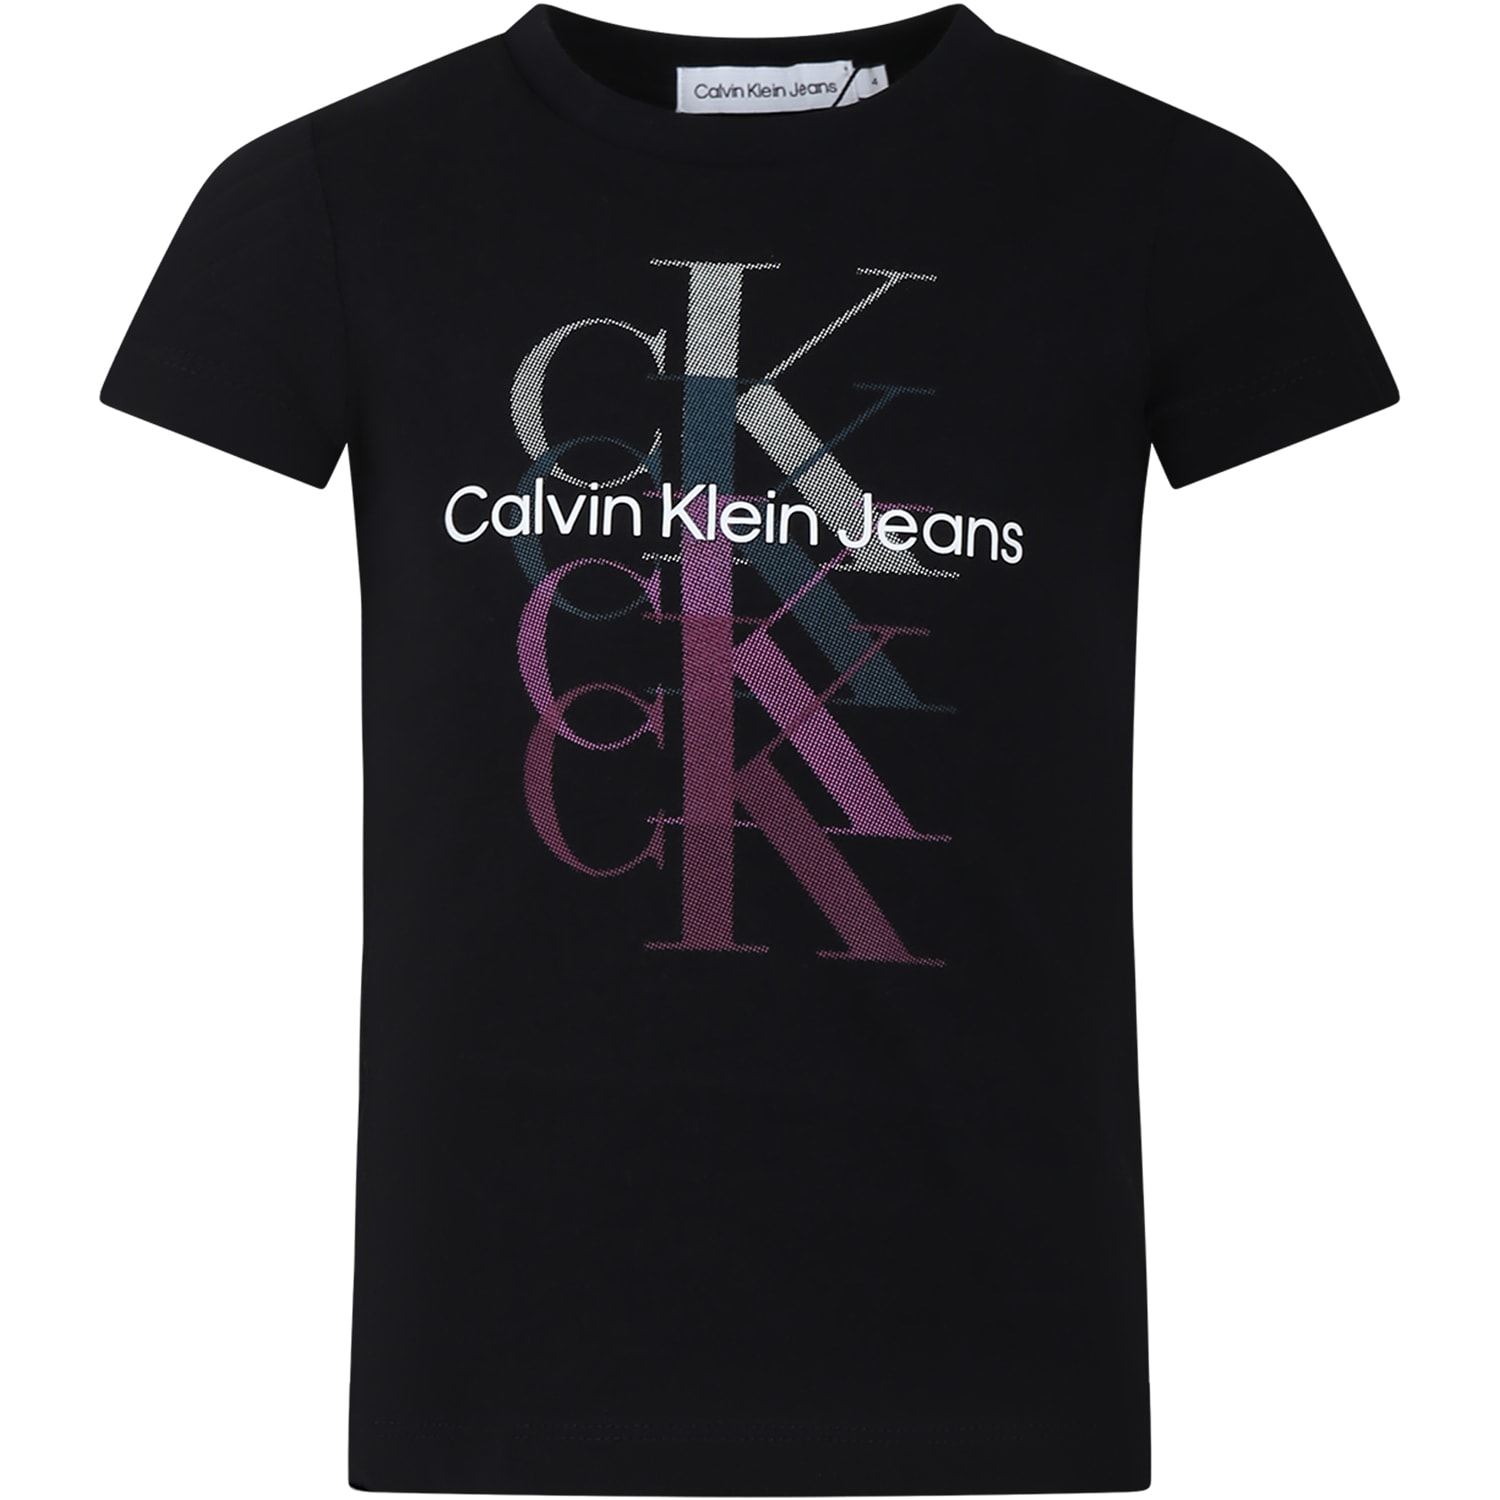 CALVIN KLEIN BLACK T-SHIRT FOR GIRL WITH LOGO